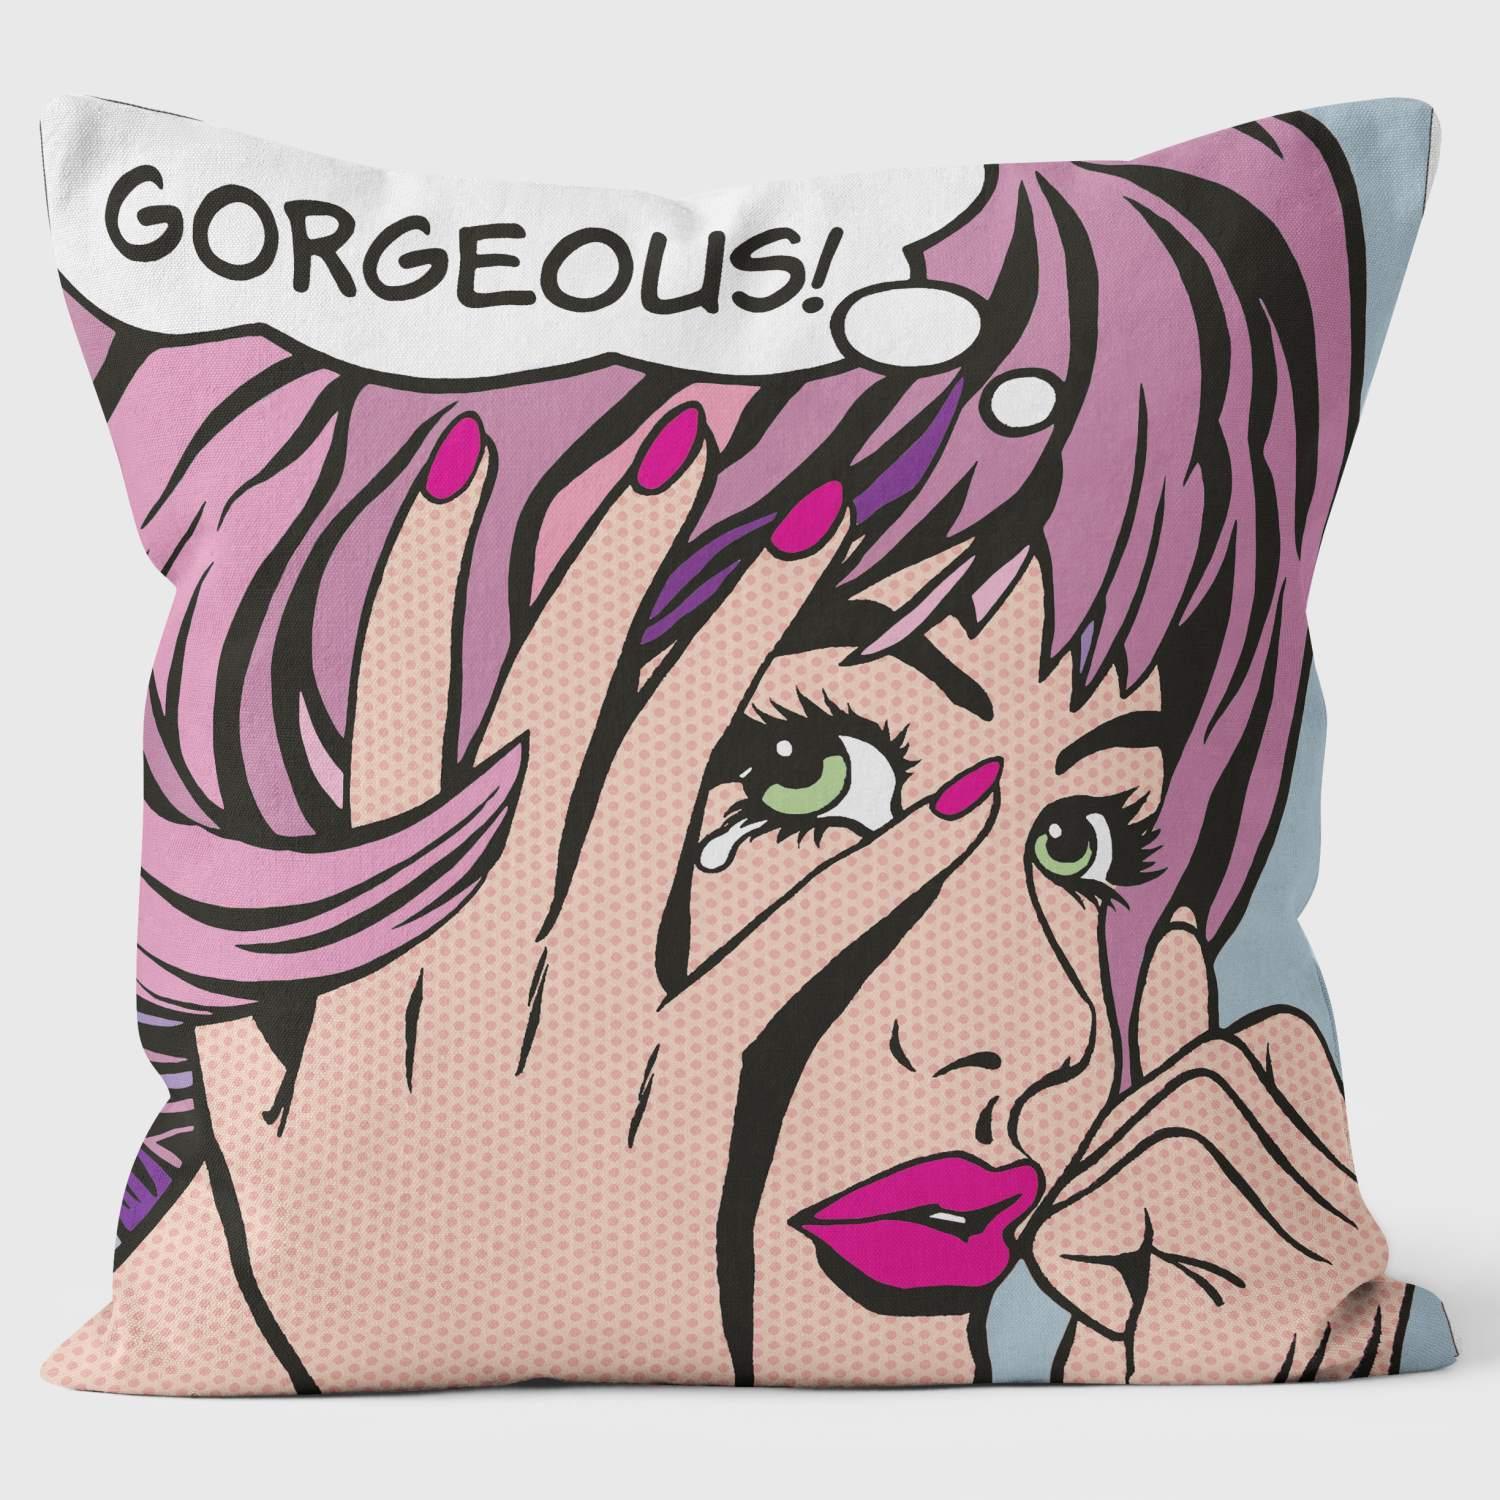 Gorgeous -Youngerman Art Cushions - Handmade Cushions UK - WeLoveCushions